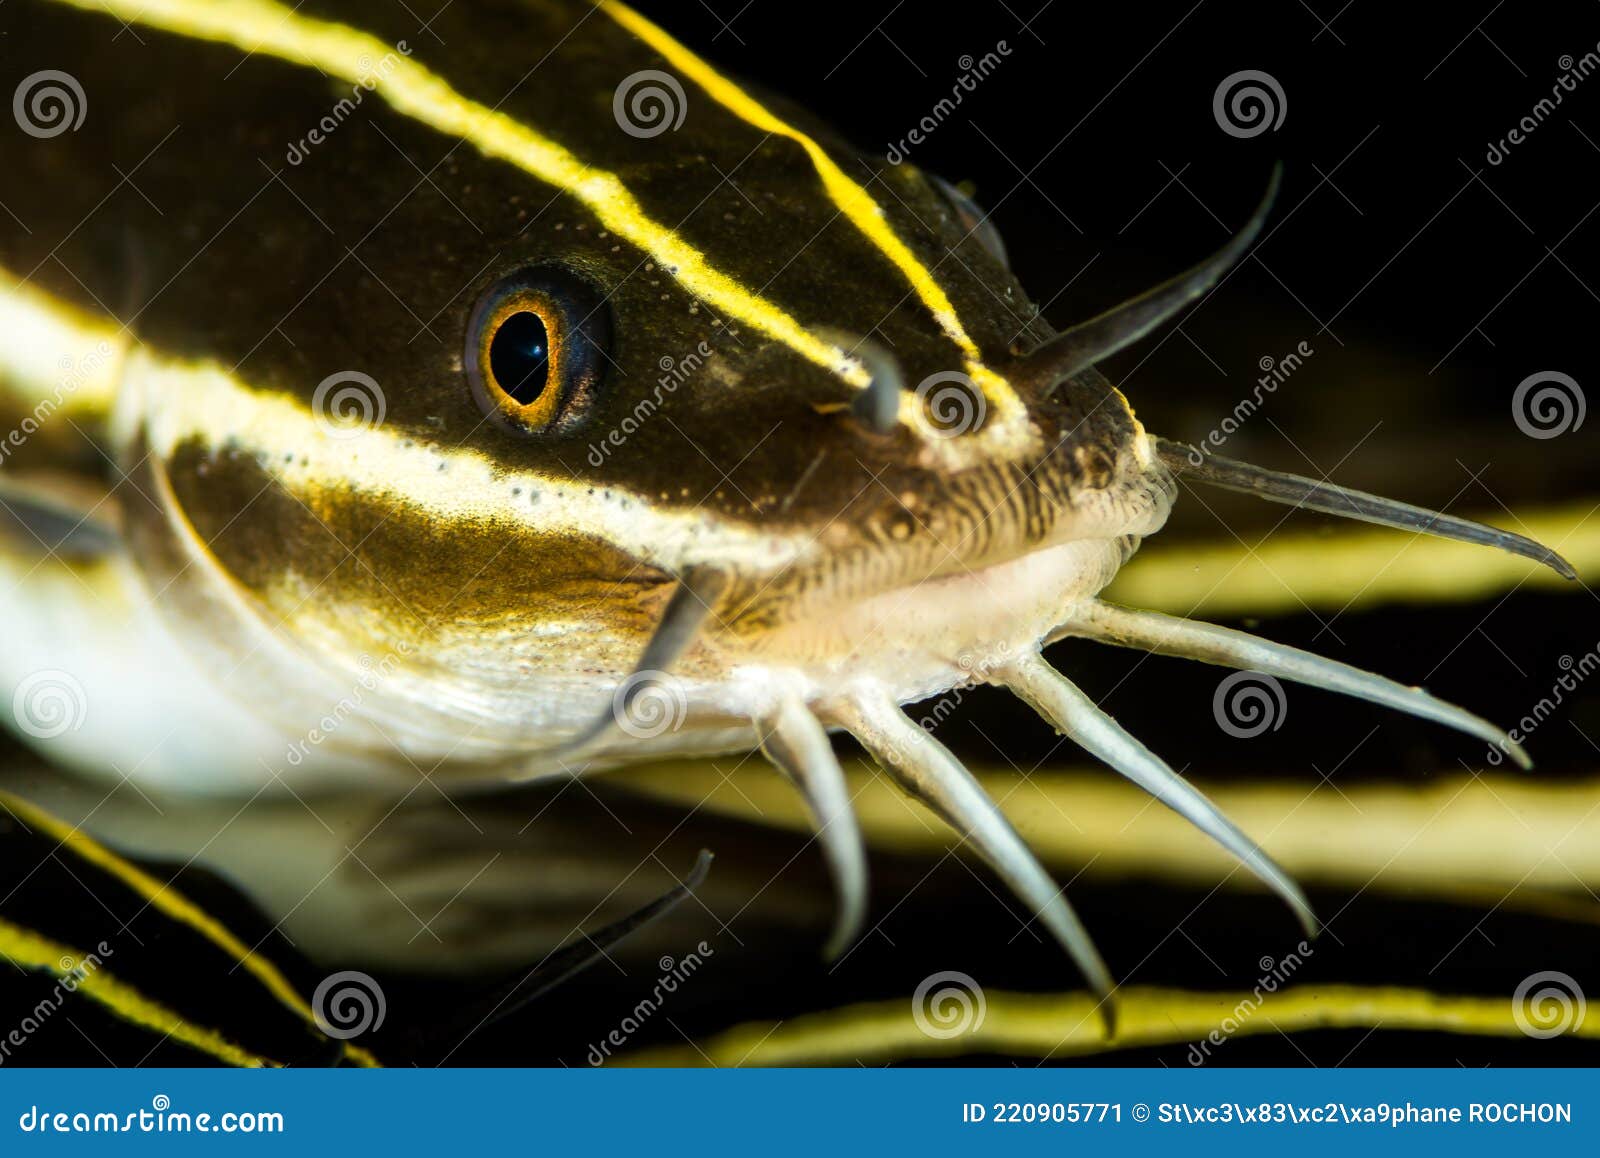 schooling of juvenile coral catfish or striped eel catfish or saltwater catfish